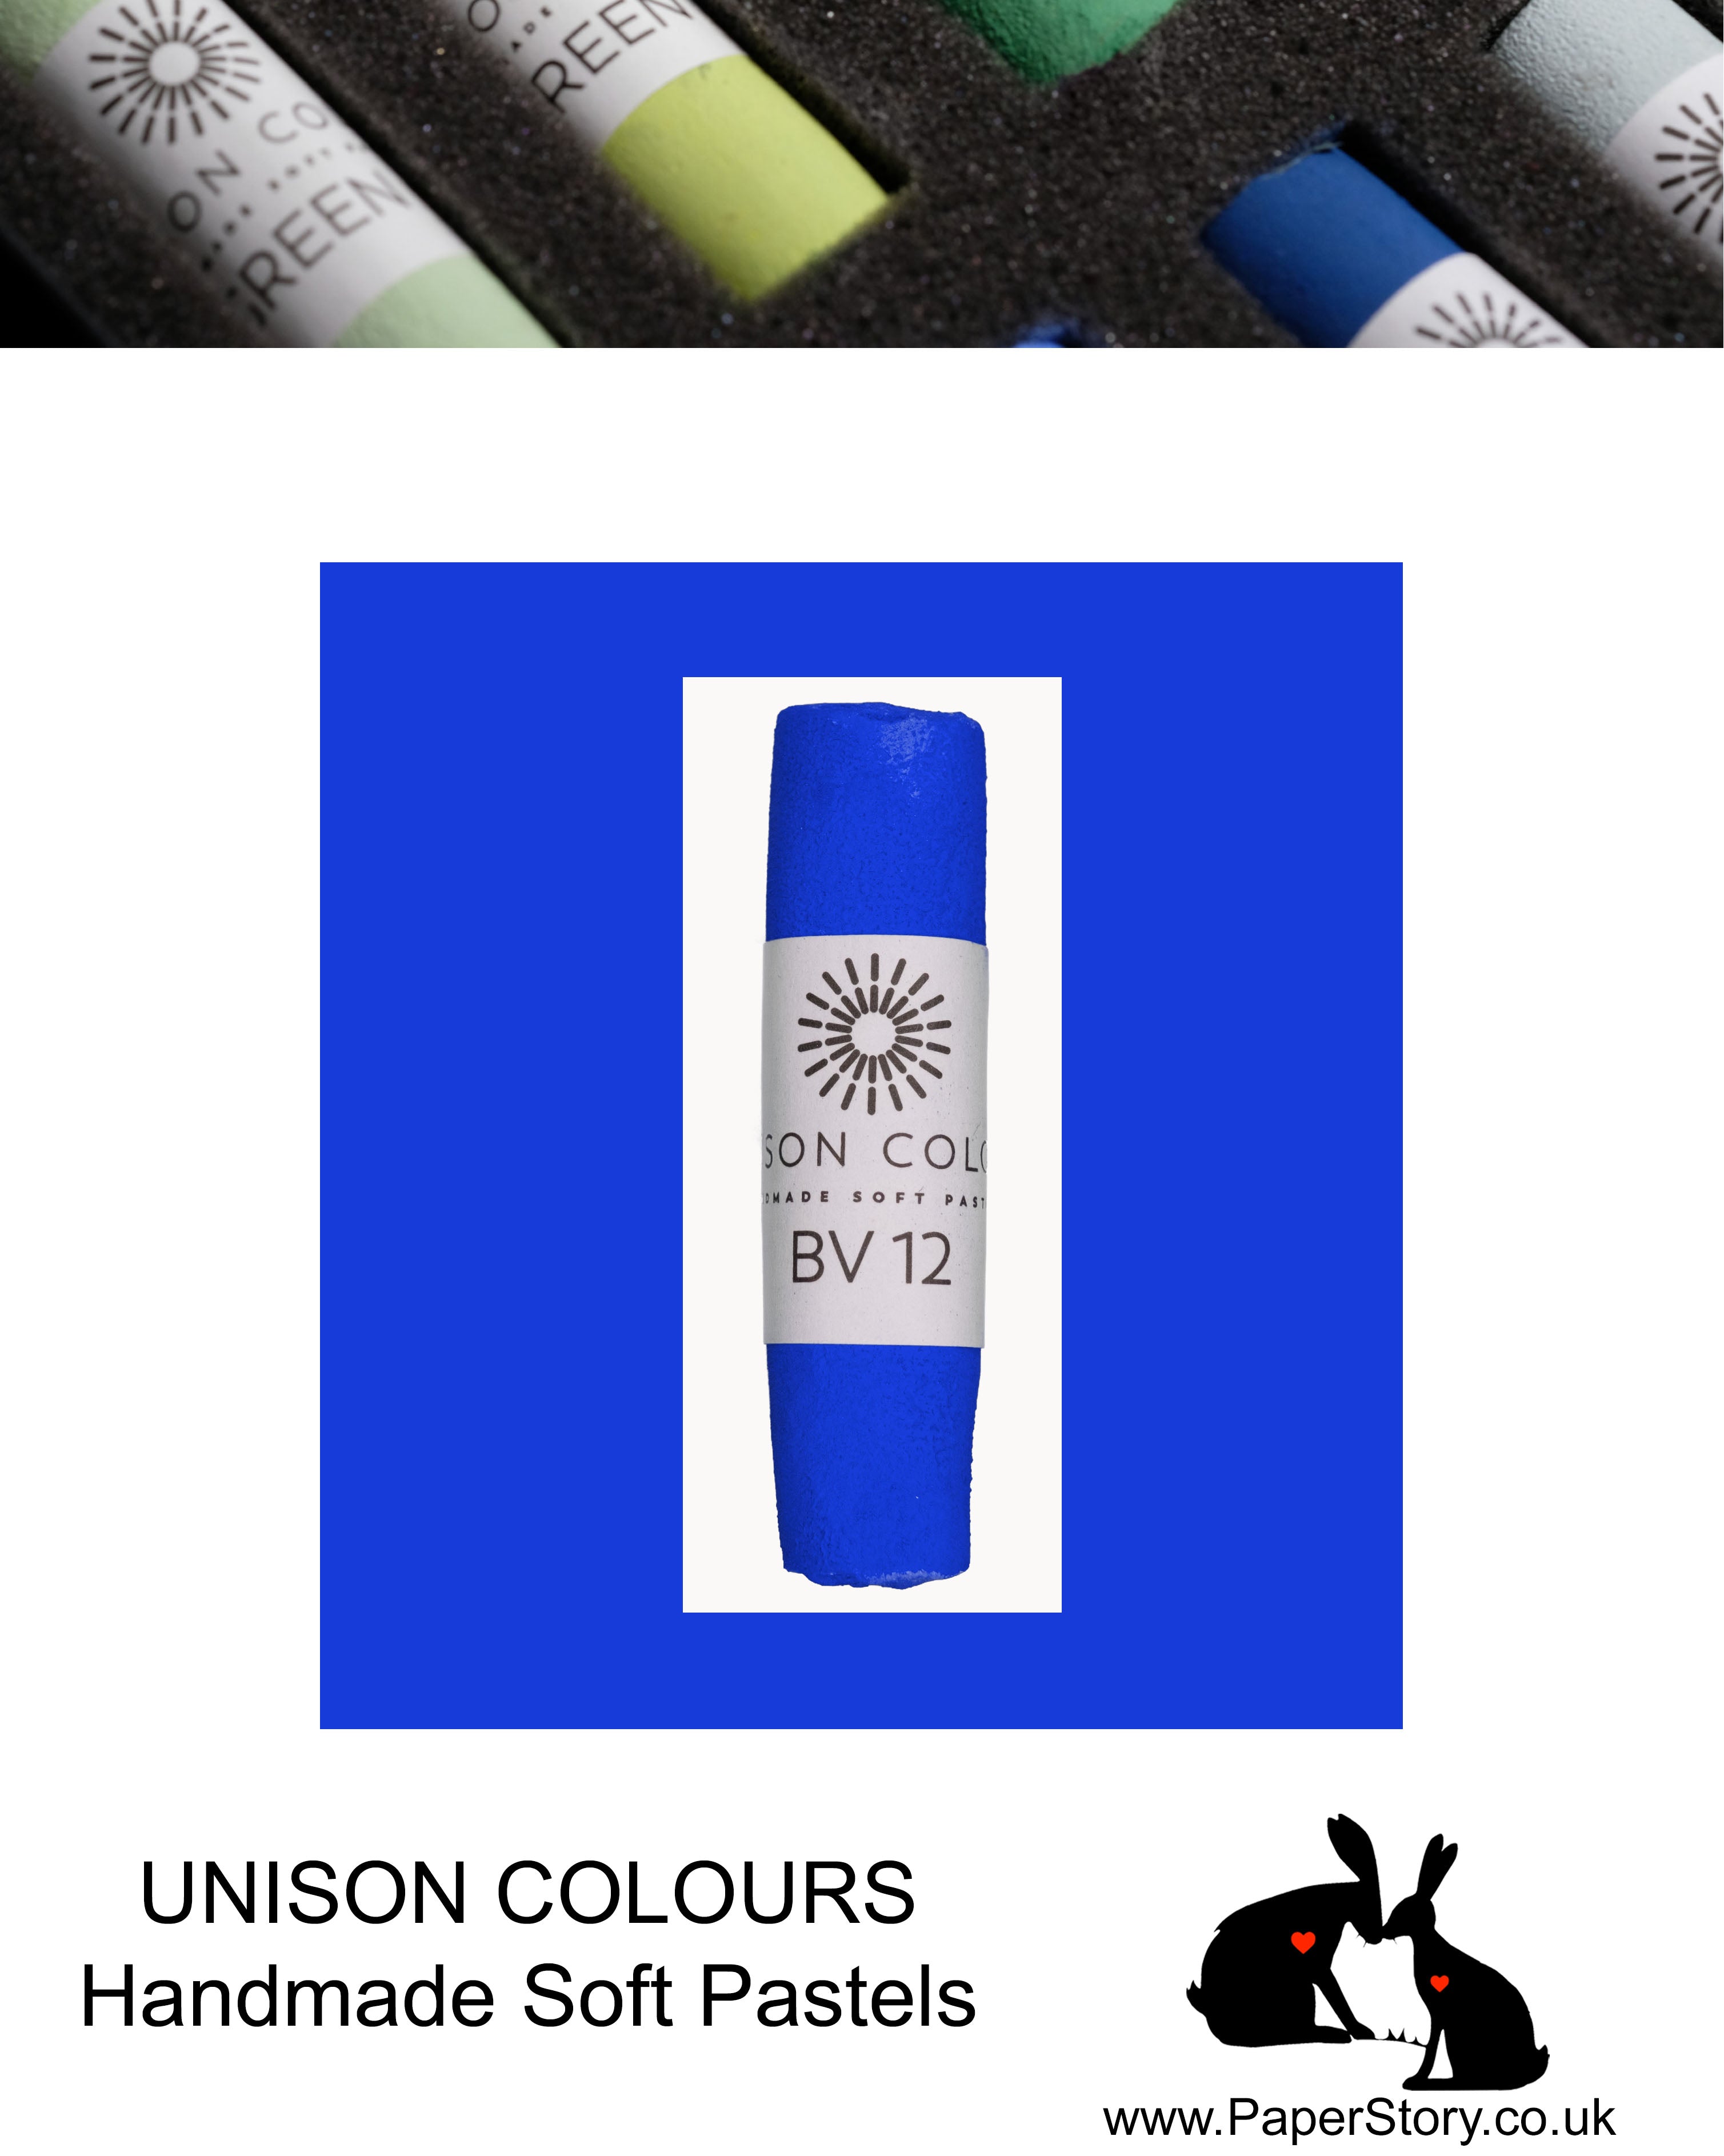 Unison Colour Handmade Soft Pastels Blue Violet 12 - Size Regular